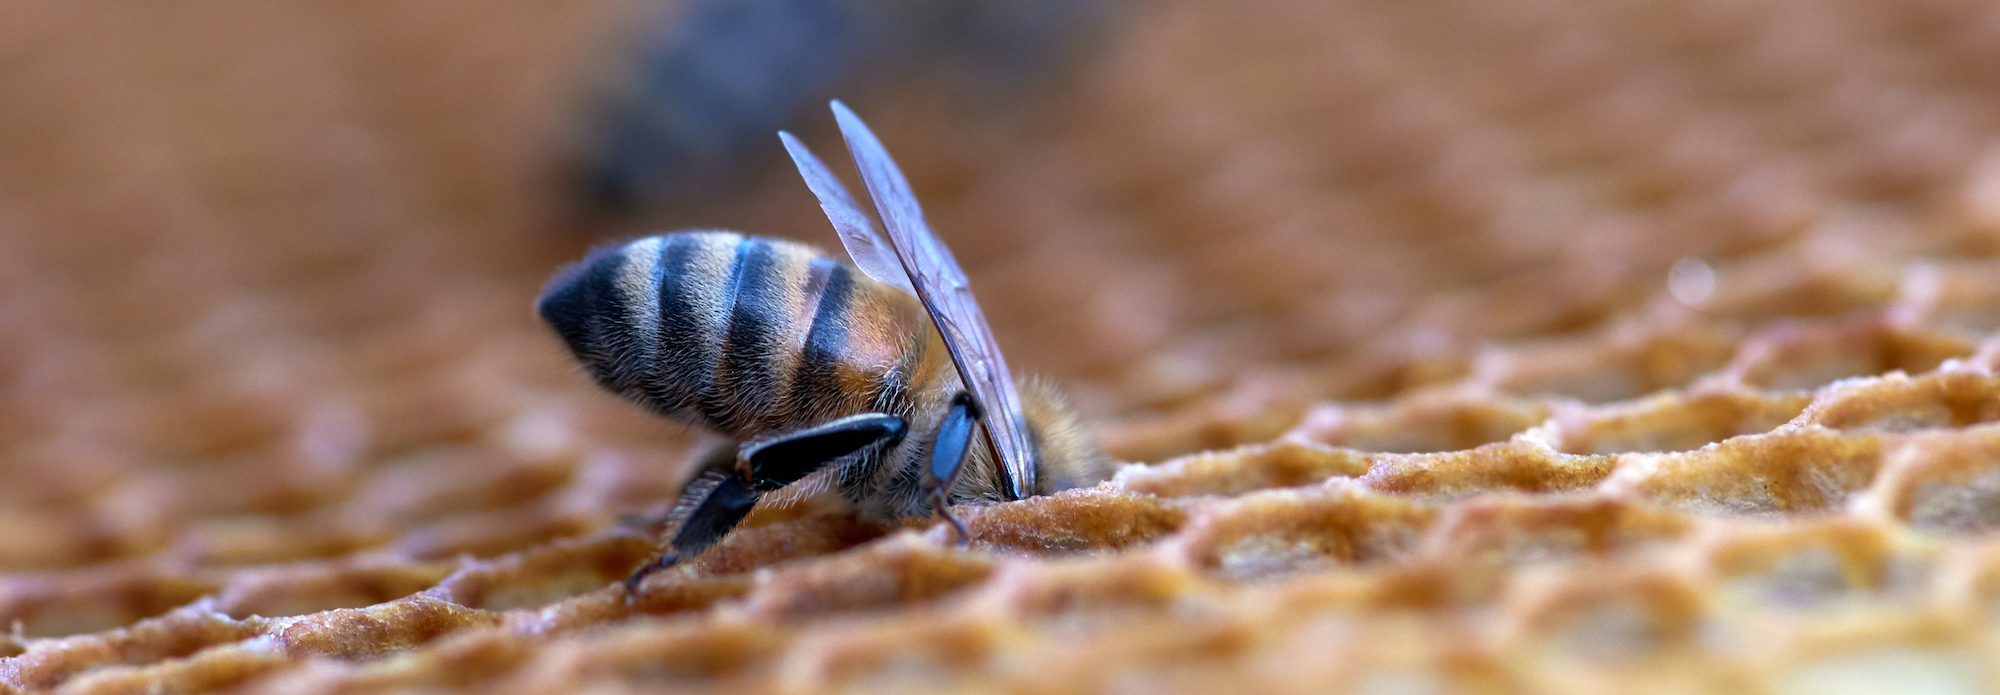 honey bee feeding on honey comb